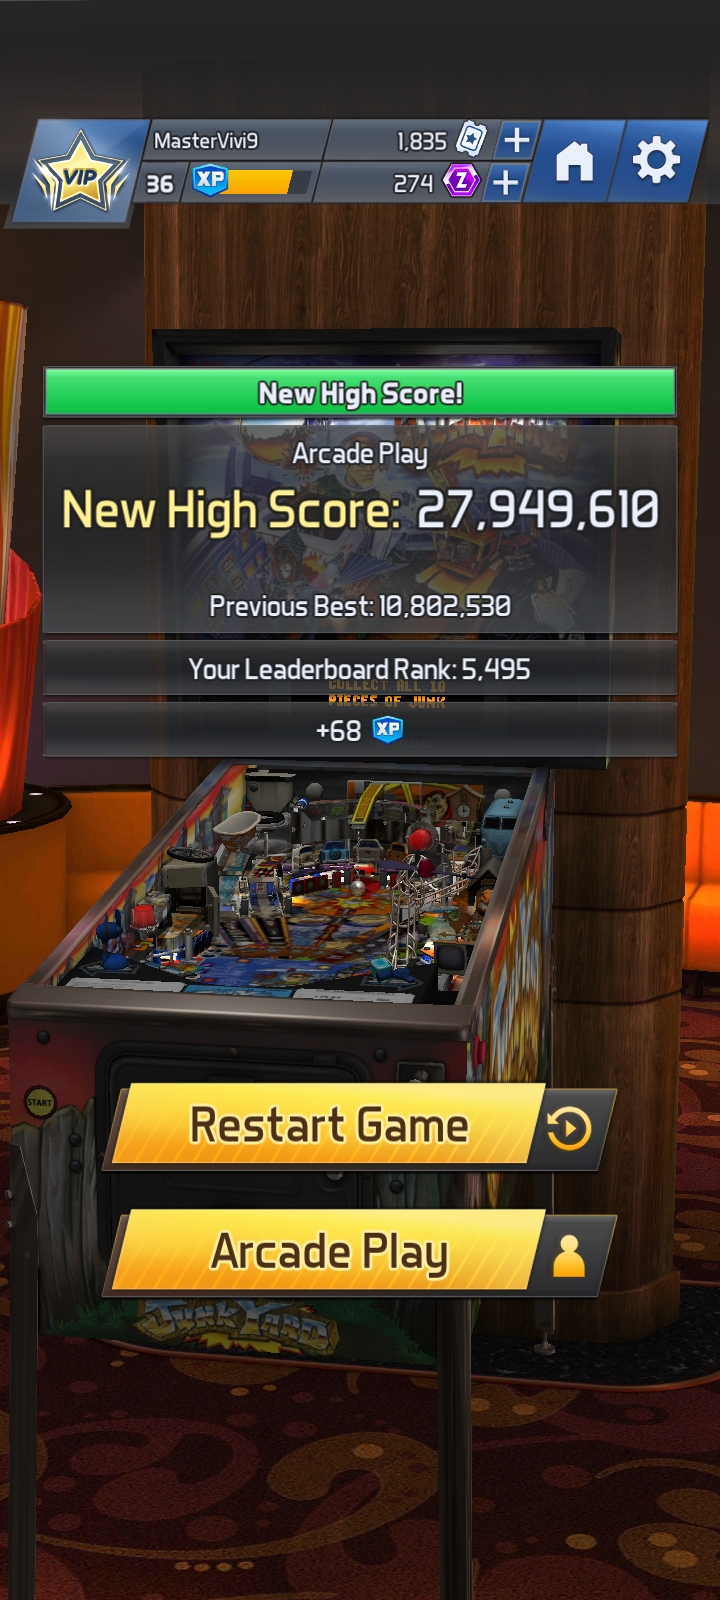 Hauntedprogram: Williams Pinball: Junk Yard [Arcade Play] (Android) 27,949,610 points on 2022-10-21 22:45:00